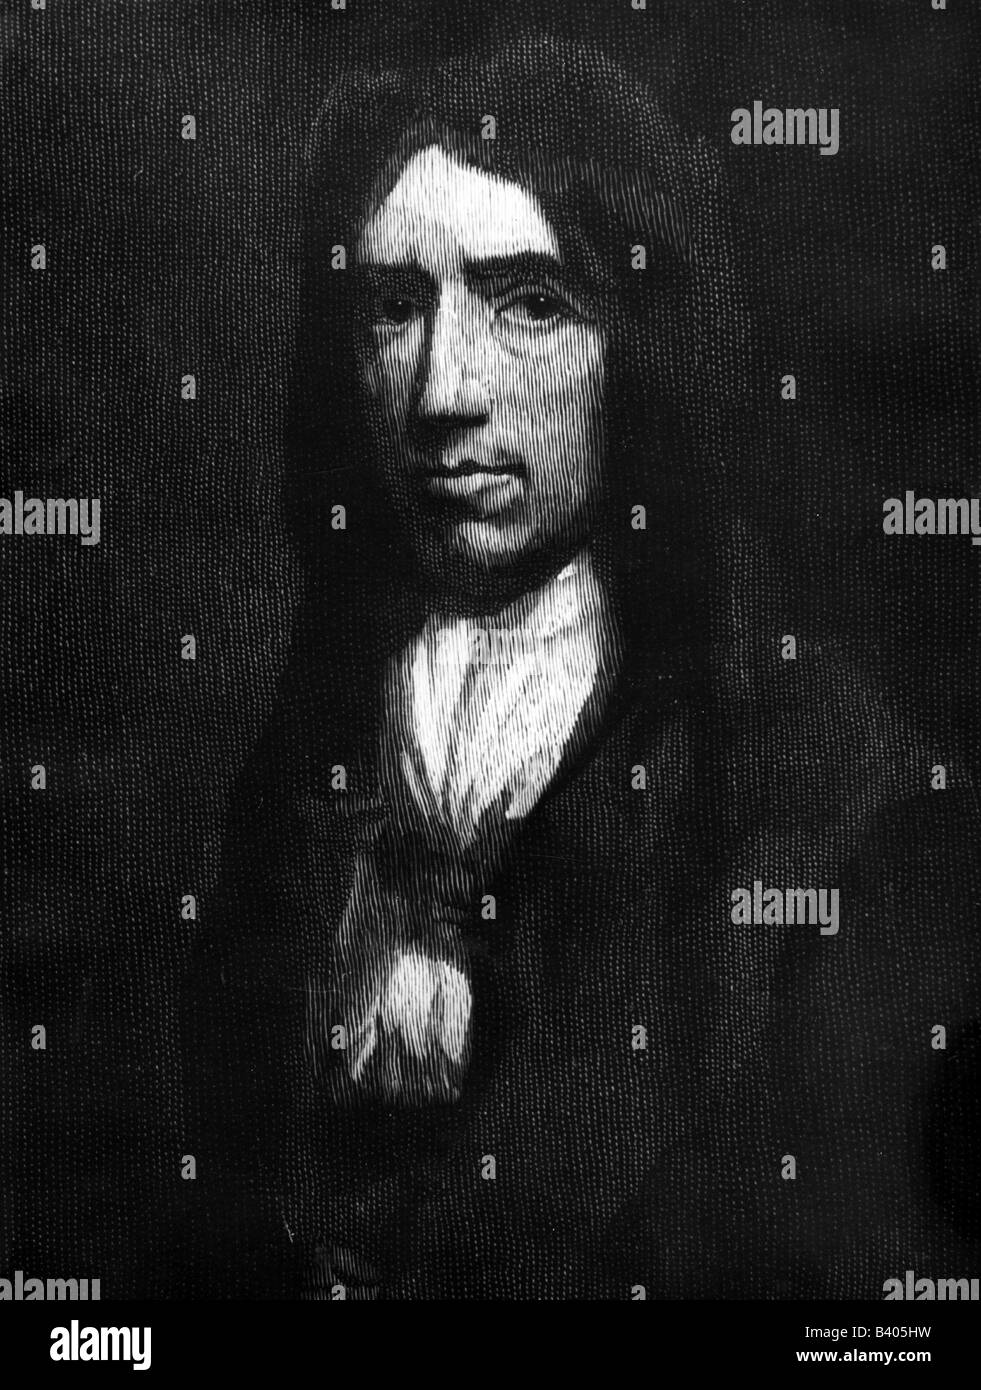 Dampier, William, 1651 - 1715, English sea captain, explorer, engraving, contemporaneous portrait, Stock Photo